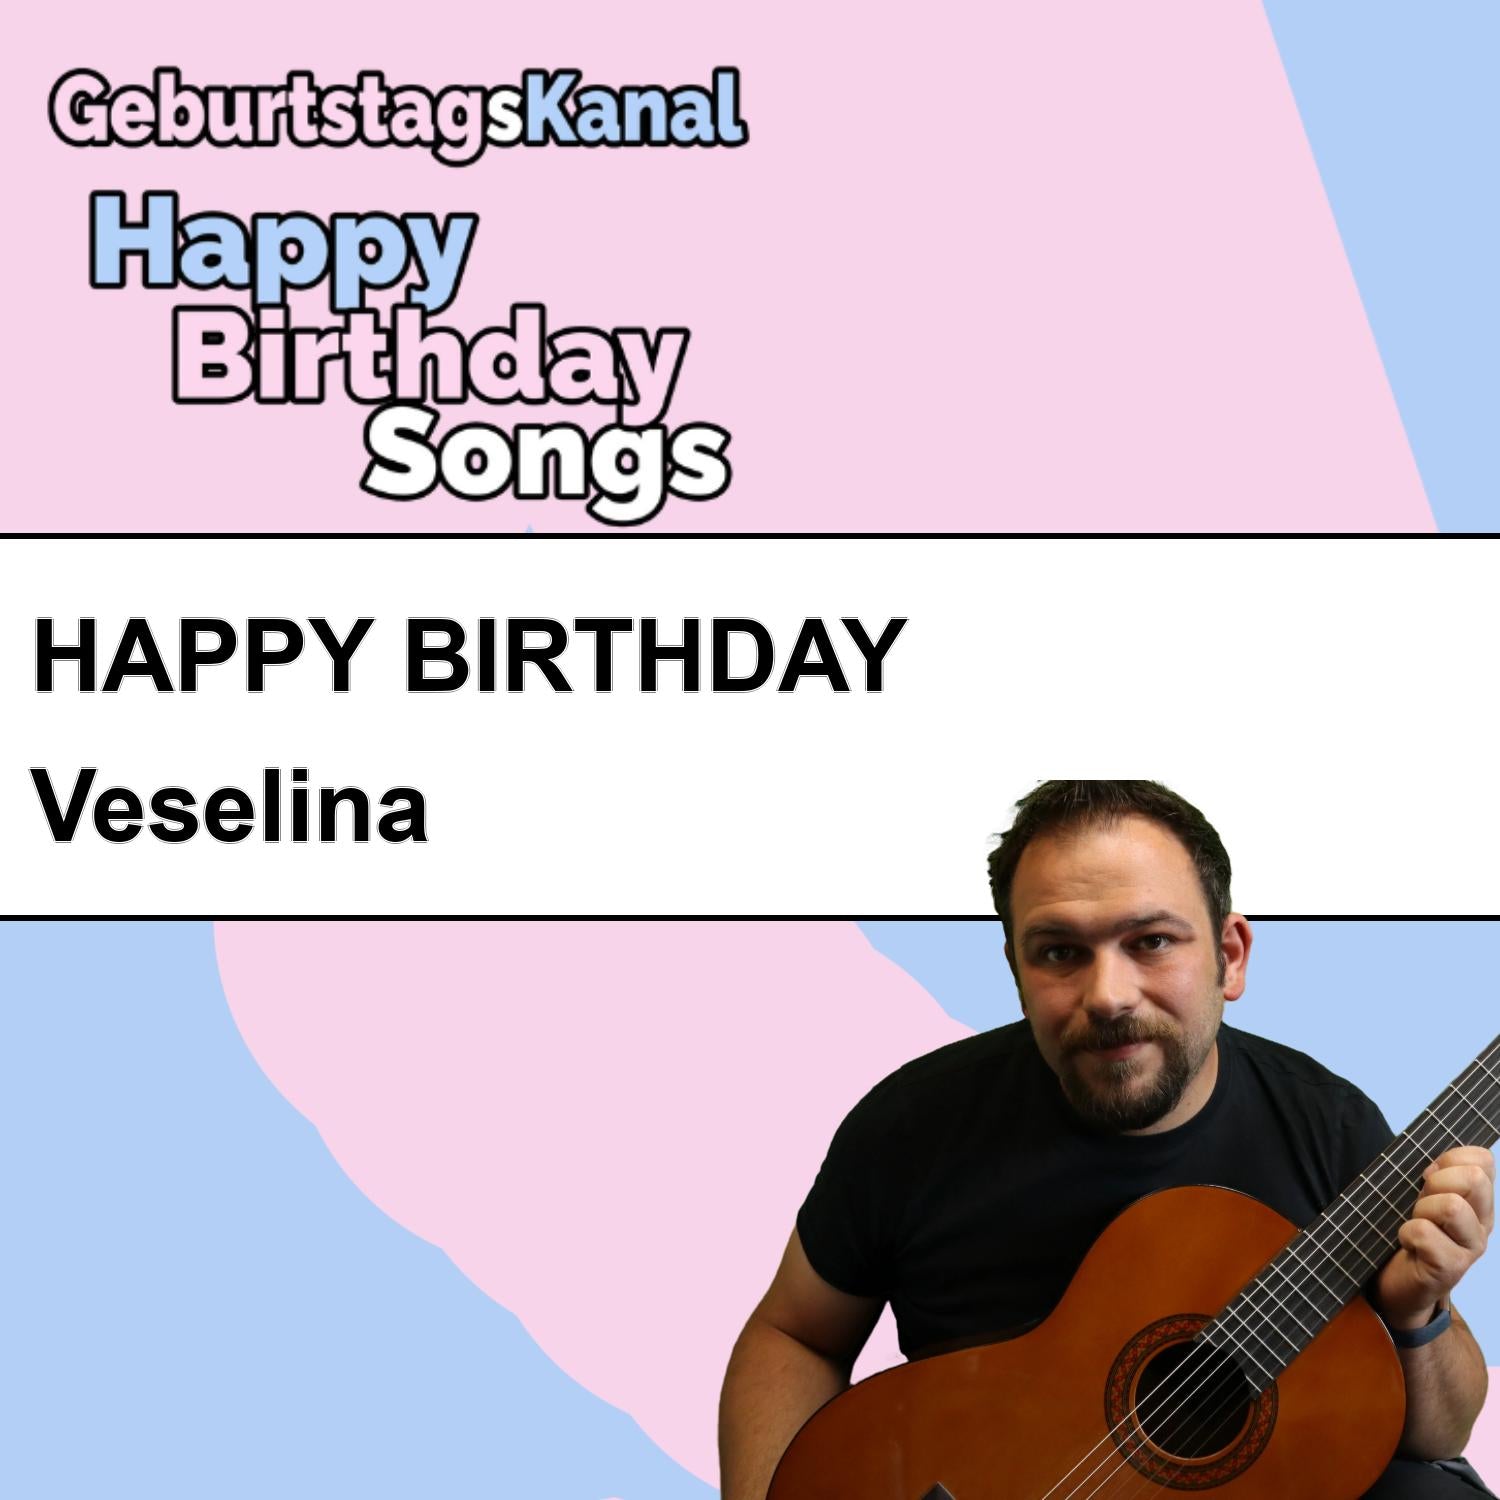 Produktbild Happy Birthday to you Veselina mit Wunschgrußbotschaft